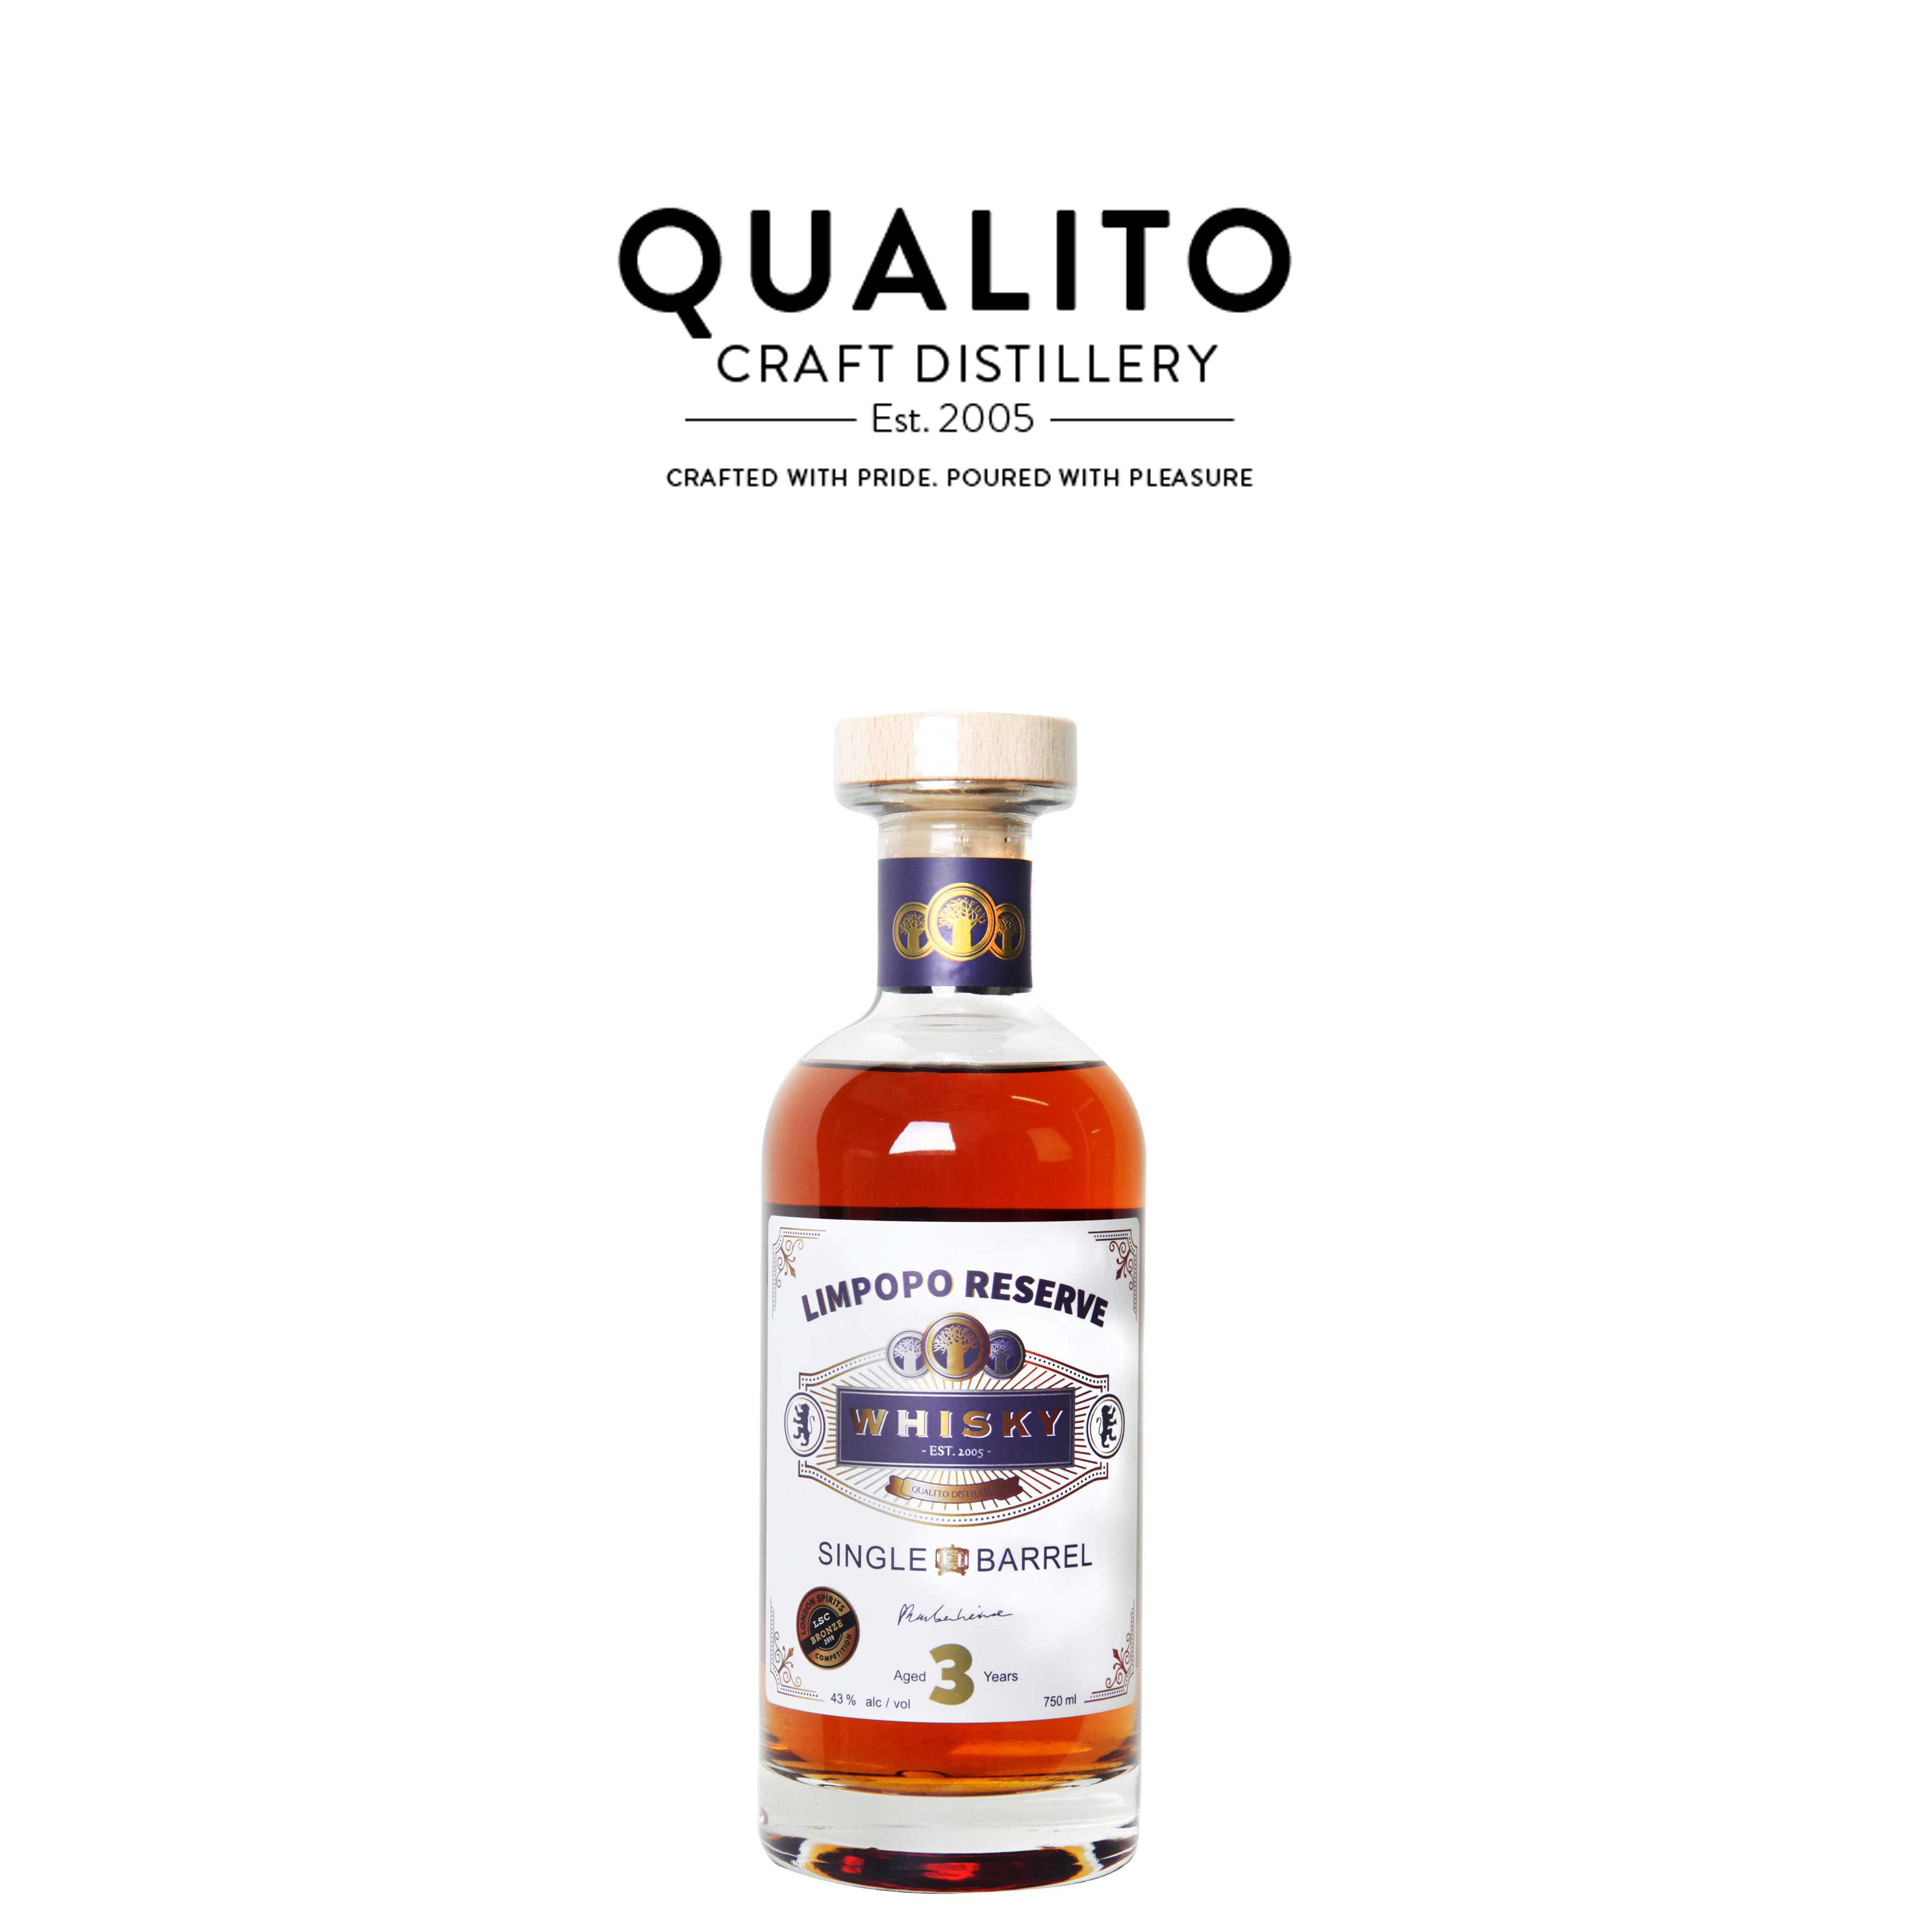 Qualito Craft Distillery